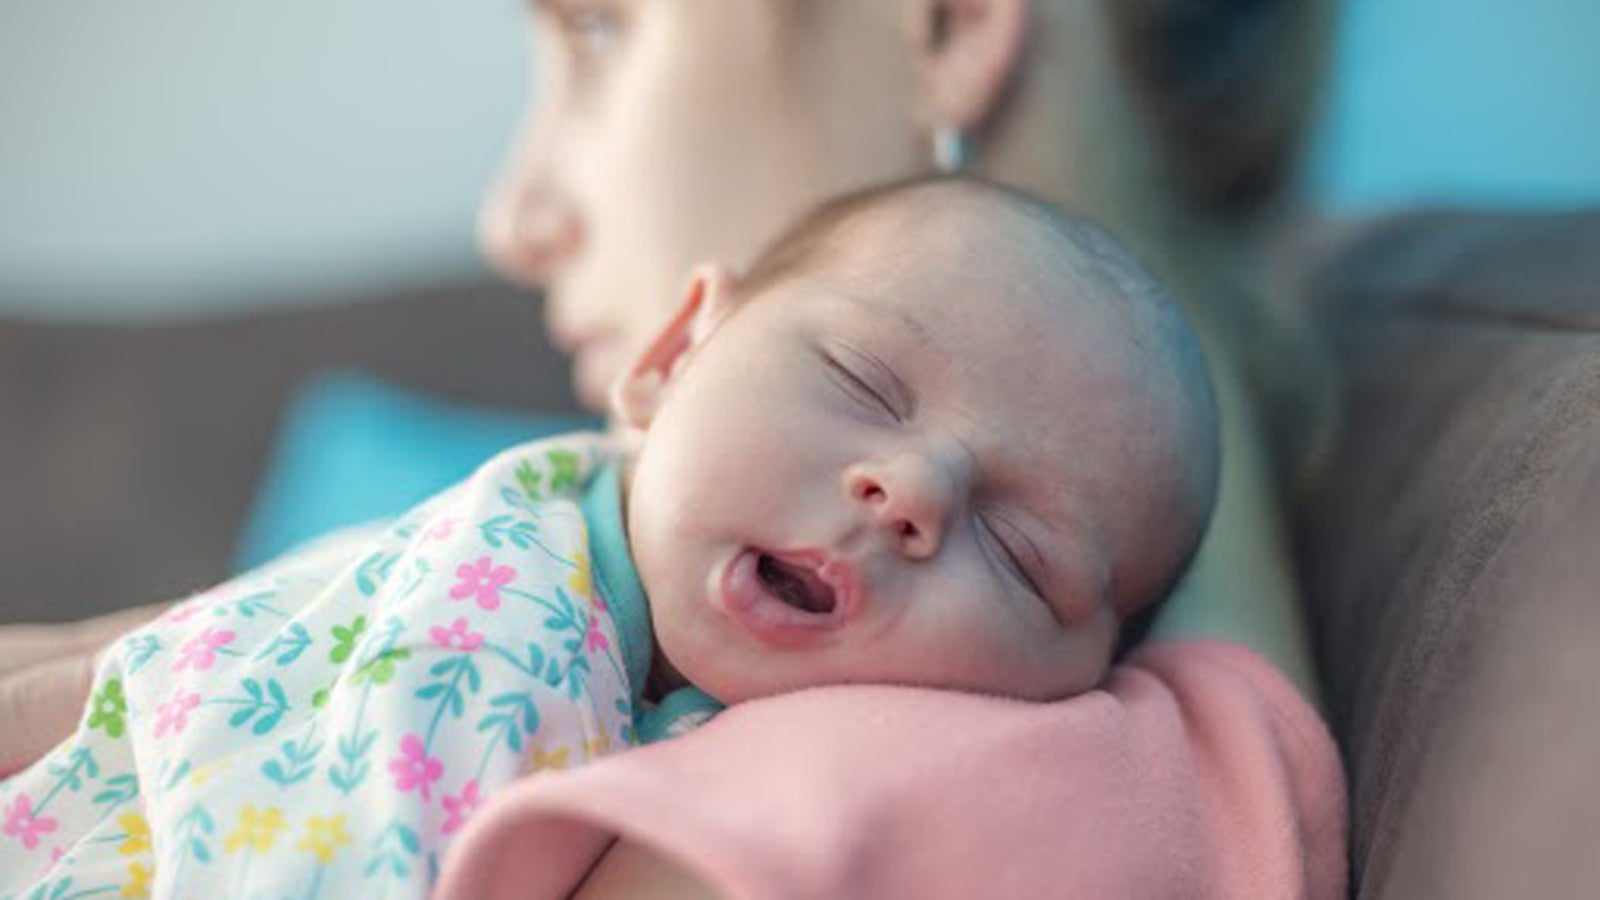 A newborn baby sleeping on a caregiver's shoulder